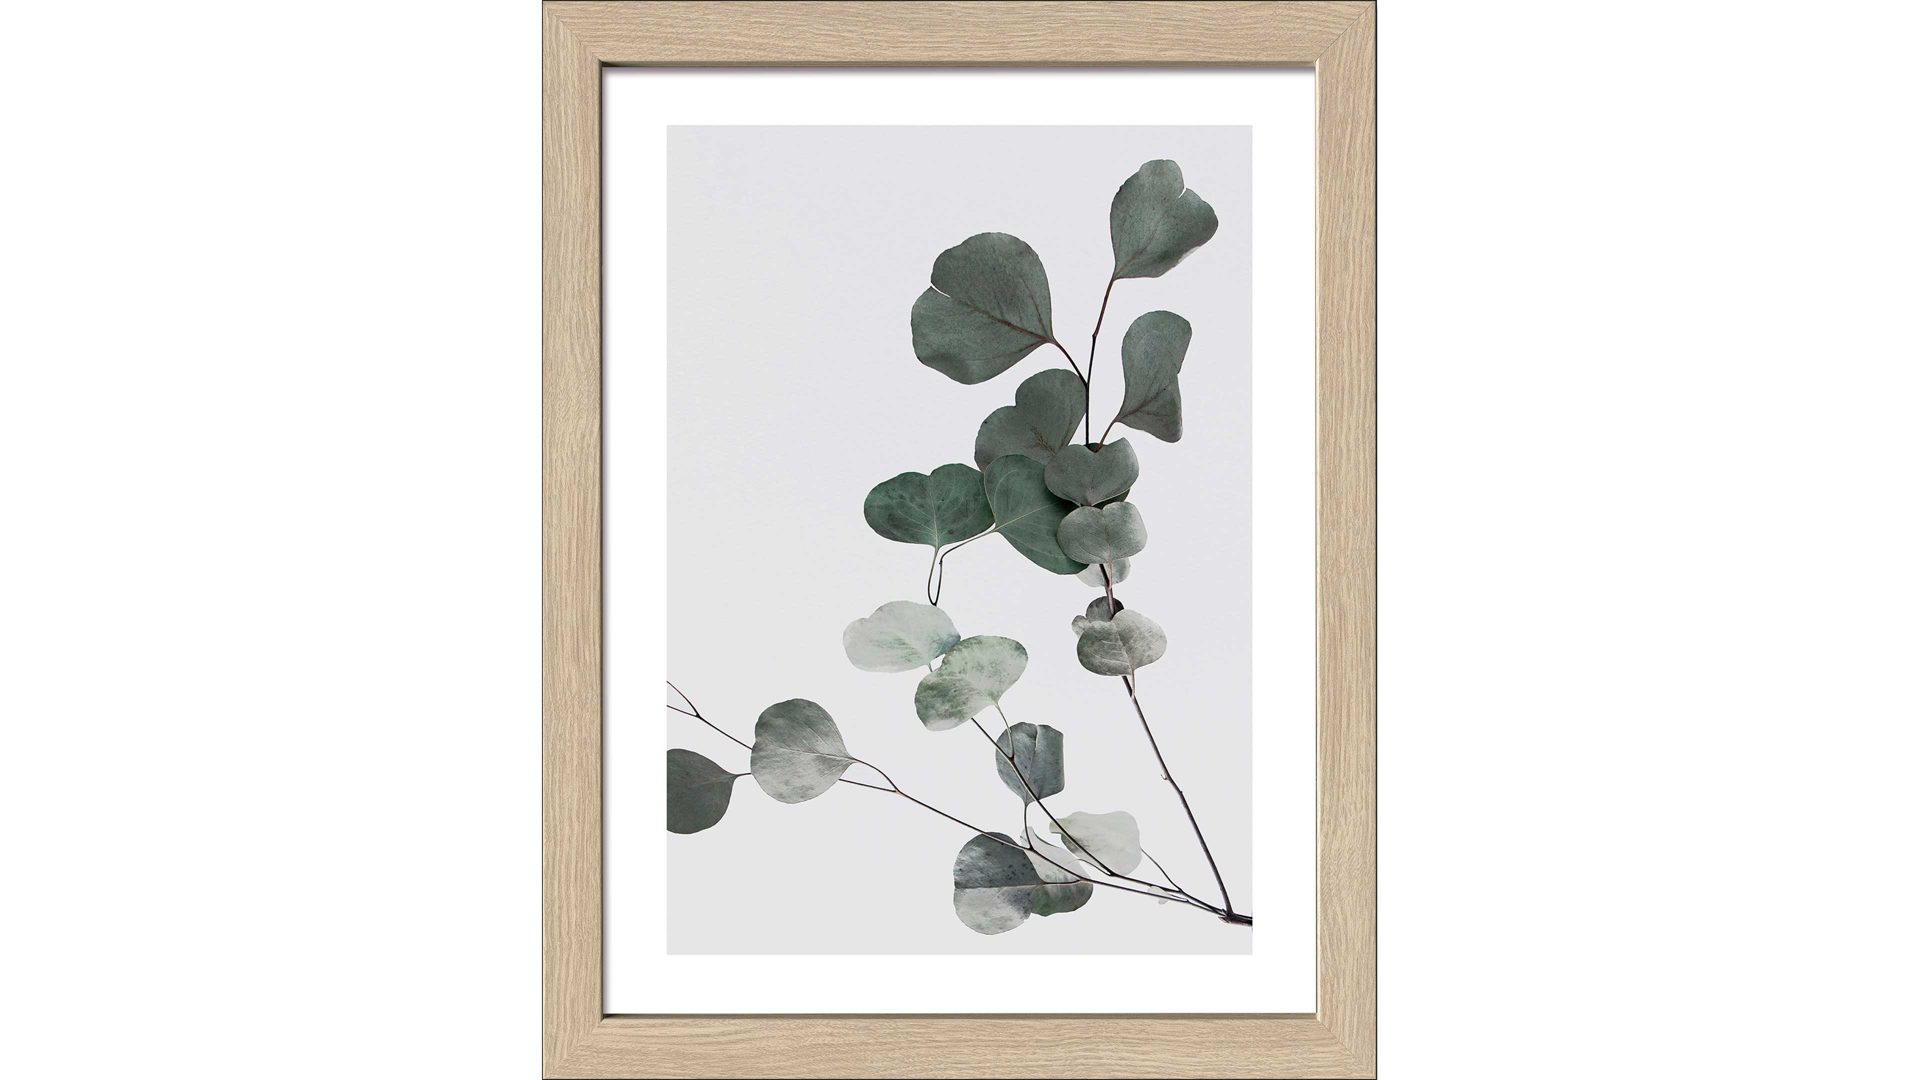 Kunstdruck Pro®art bilderpalette aus Karton / Papier / Pappe in Grün PRO®ART Kunstdruck Scandic Living Eucalyptus & Eiche - ca. 35 x 45 cm